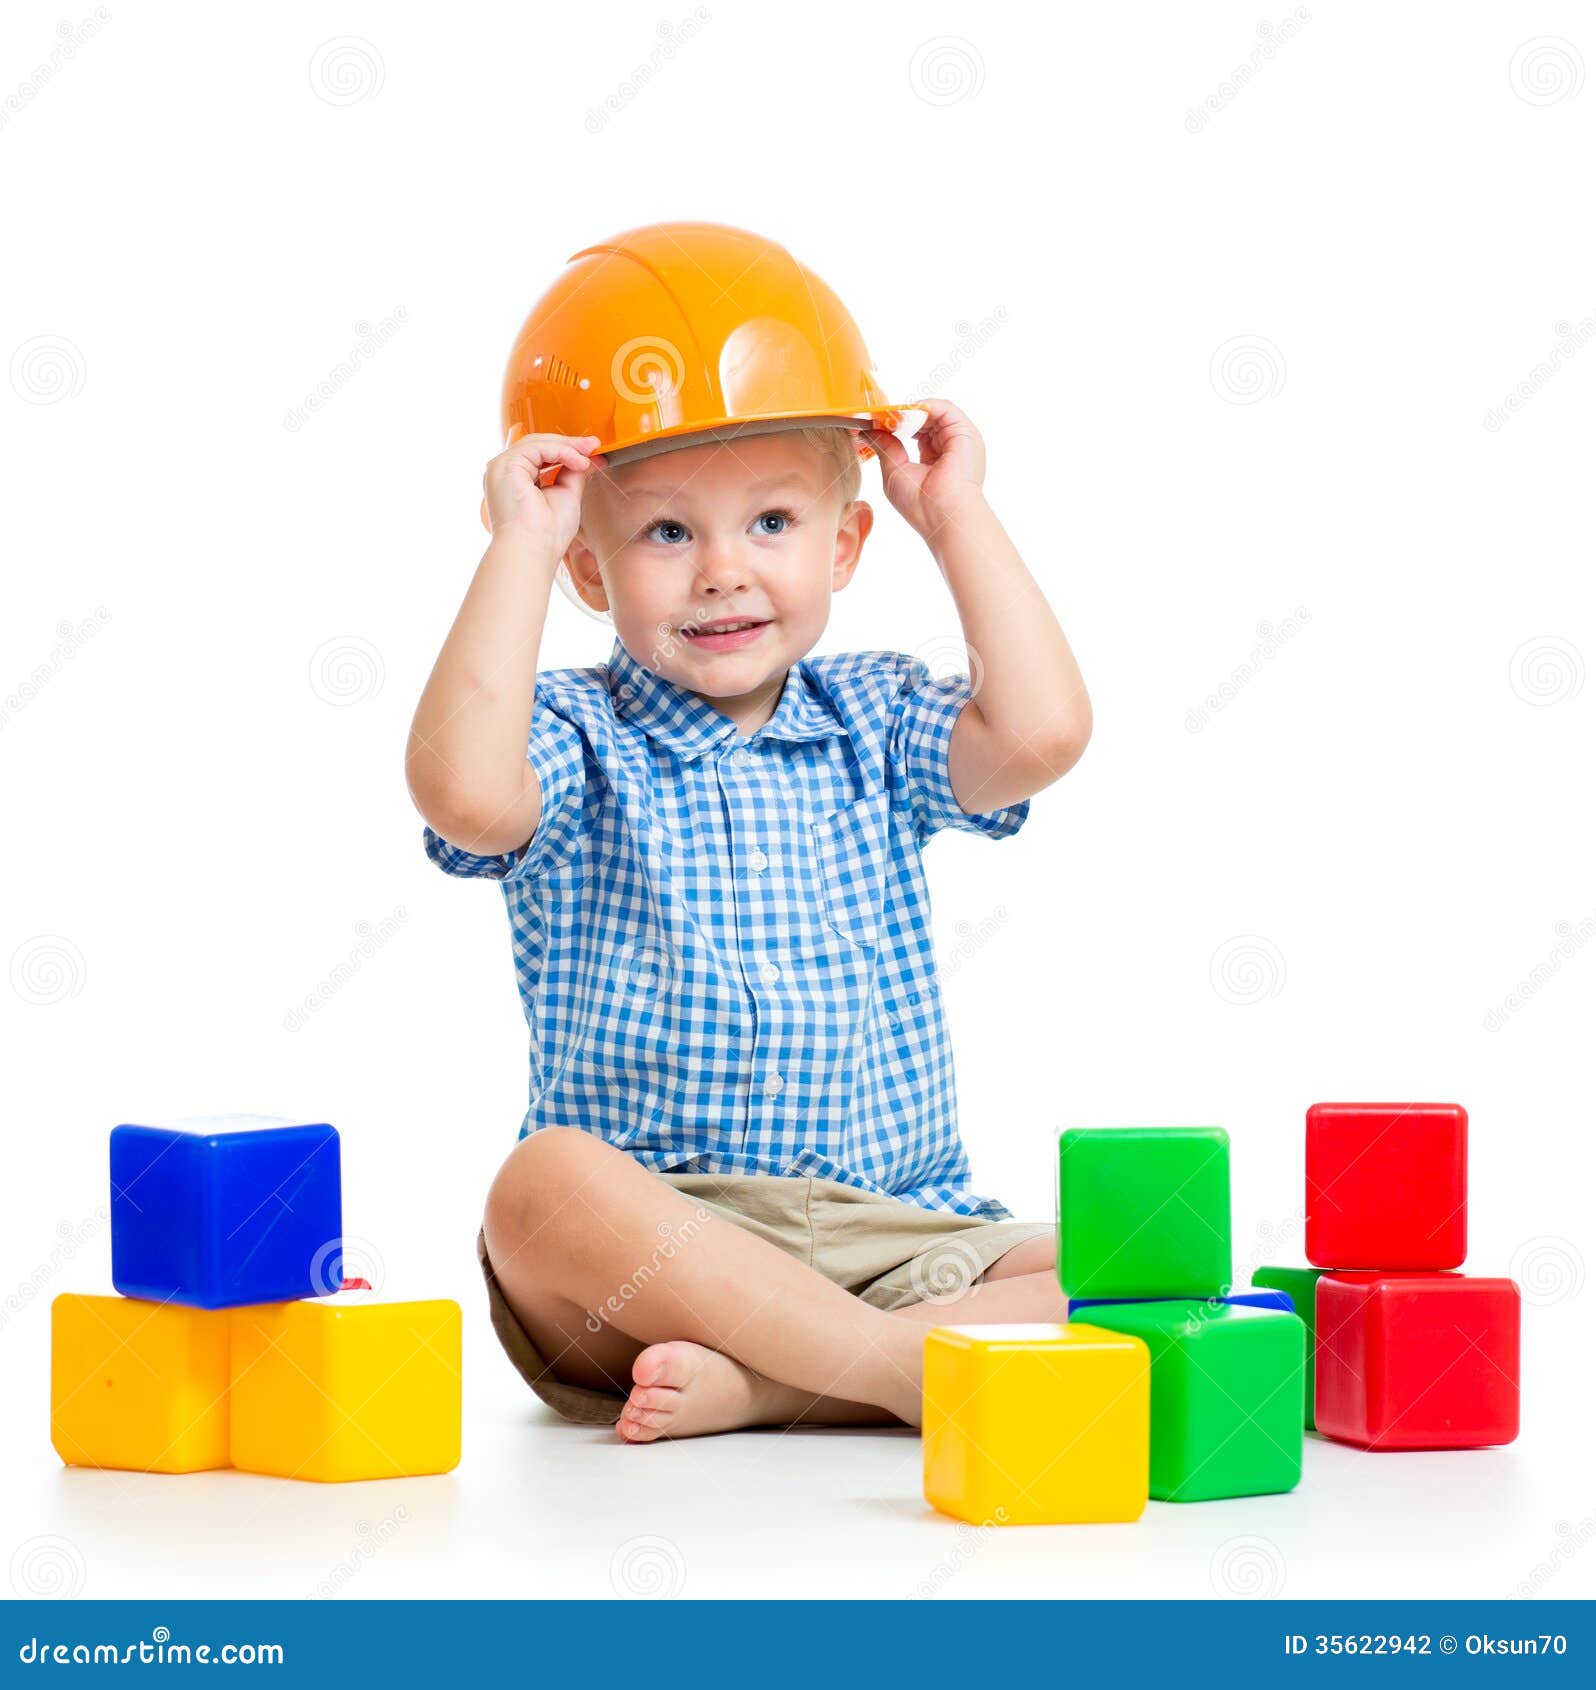 child-playing-building-blocks-toy-kid-35622942.jpg